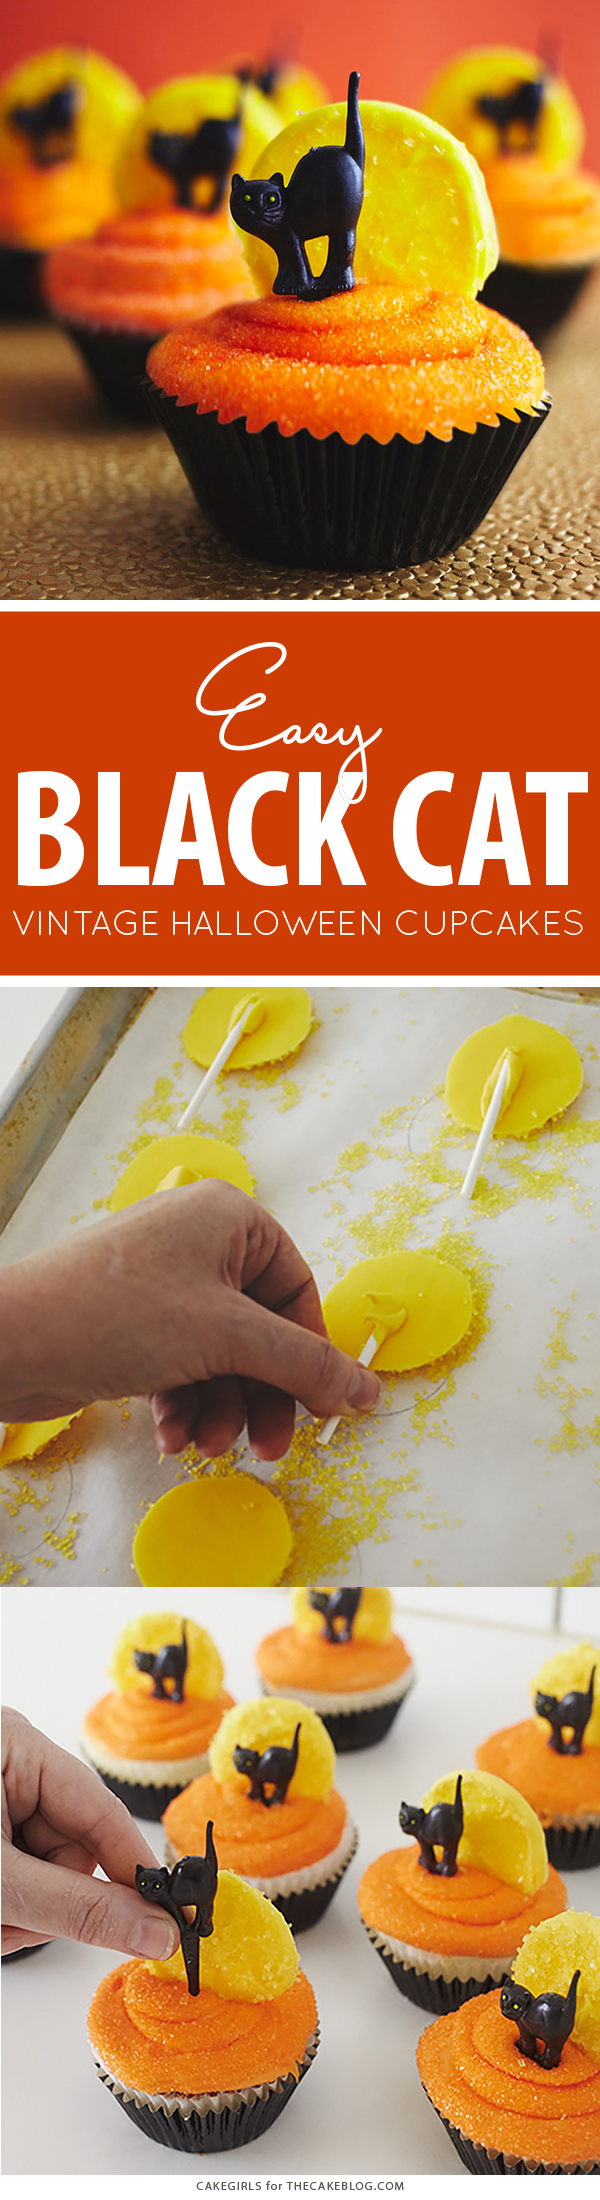 Black Cat Halloween Cupcakes | by Cakegirls for TheCakeBlog.com